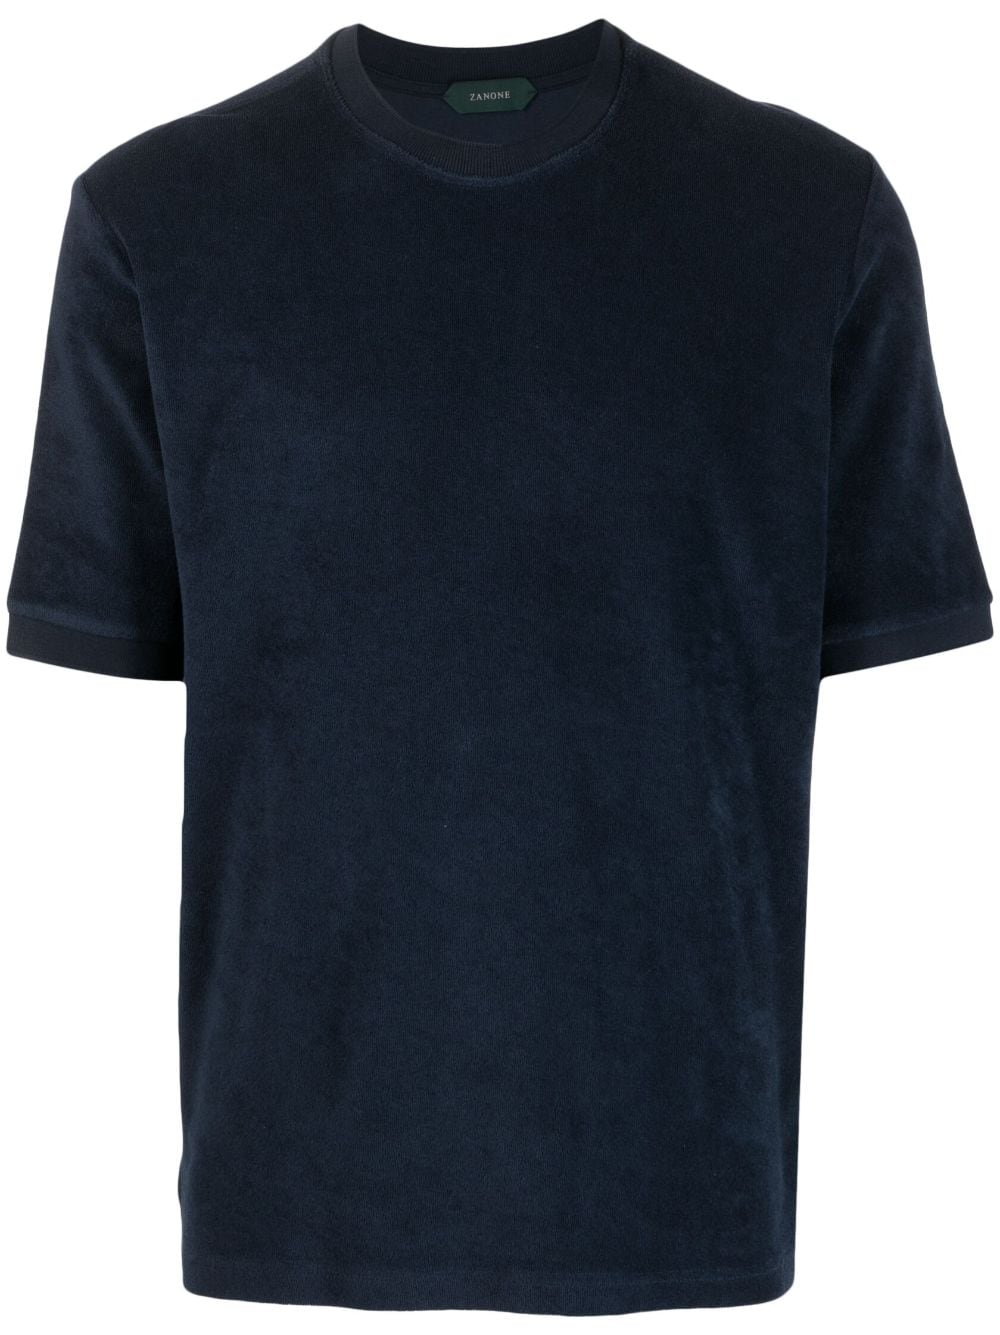 zanone t-shirt en coton à col rond - bleu